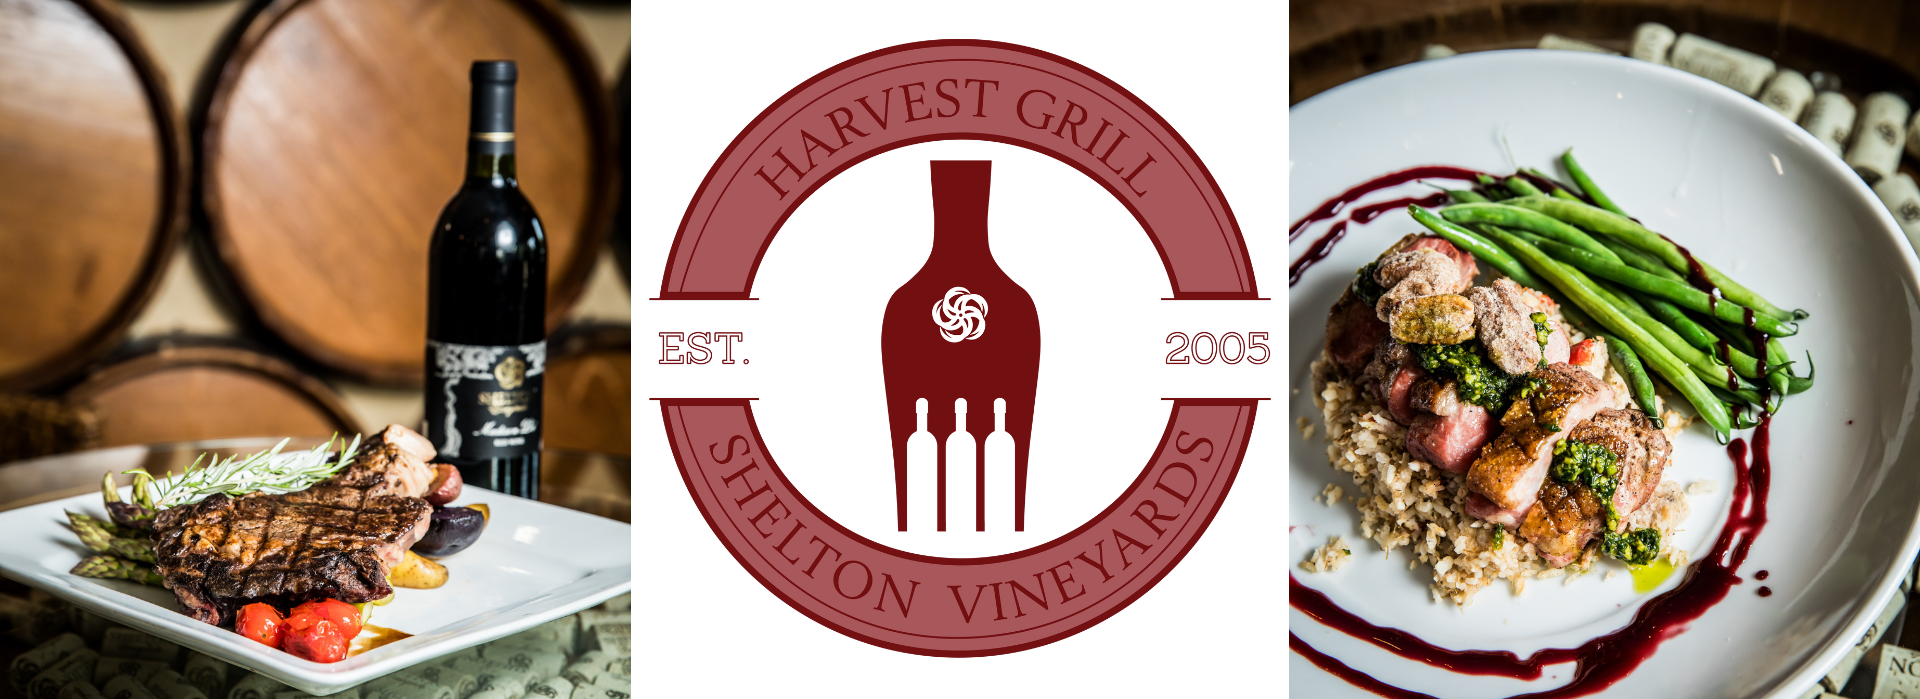 Harvest Grill - Shelton Vineyards